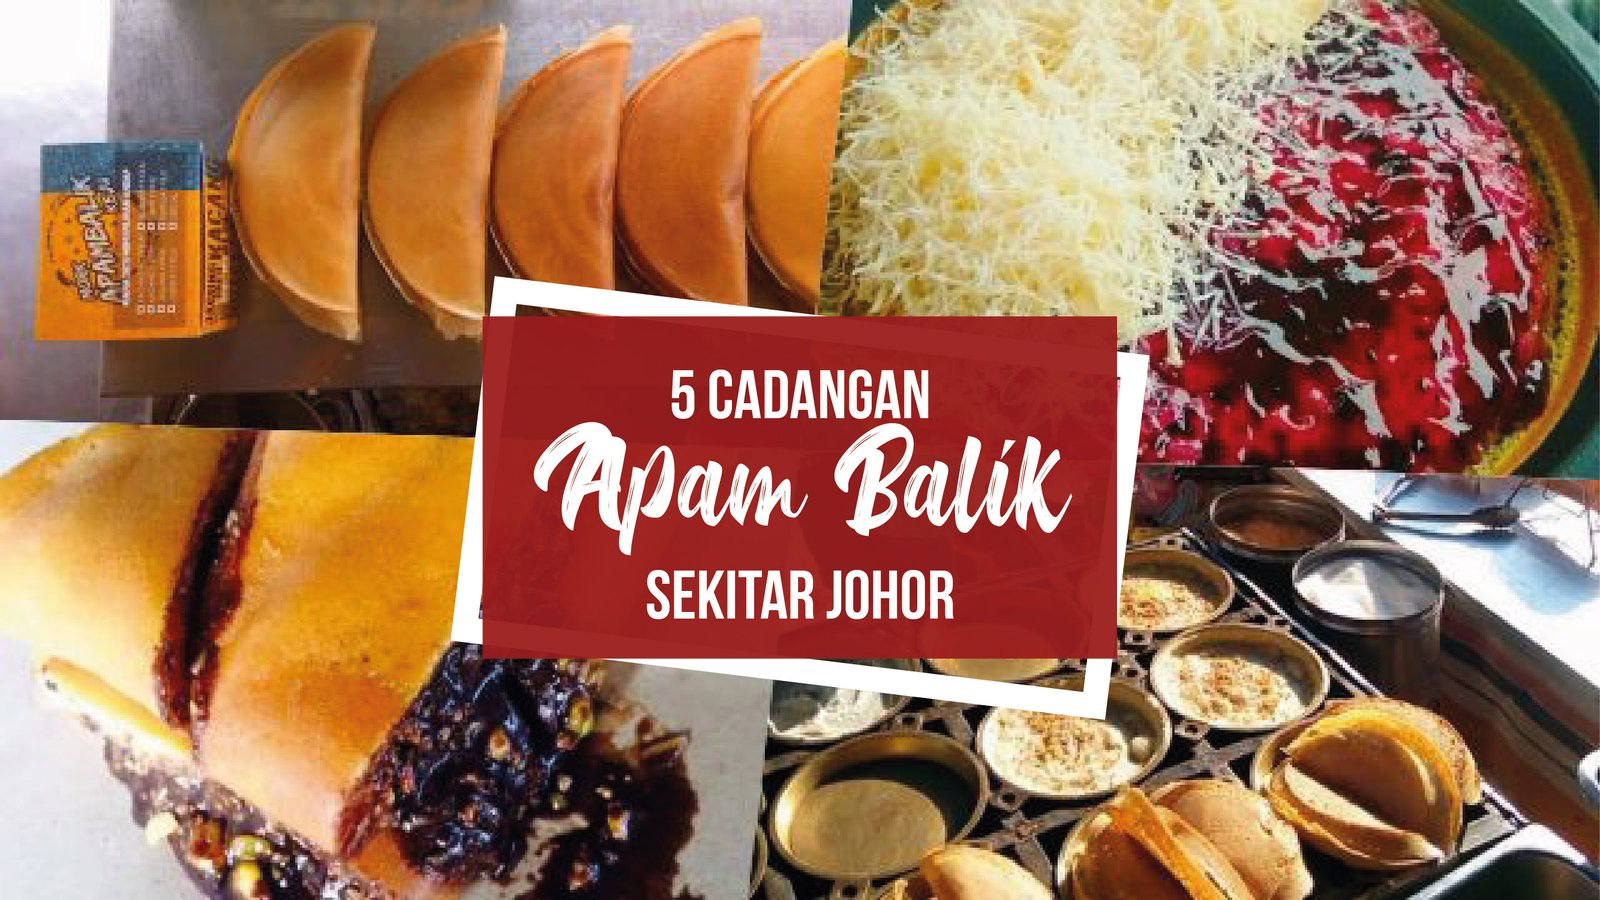 5 cadangan Apam Balik sekitar Johor